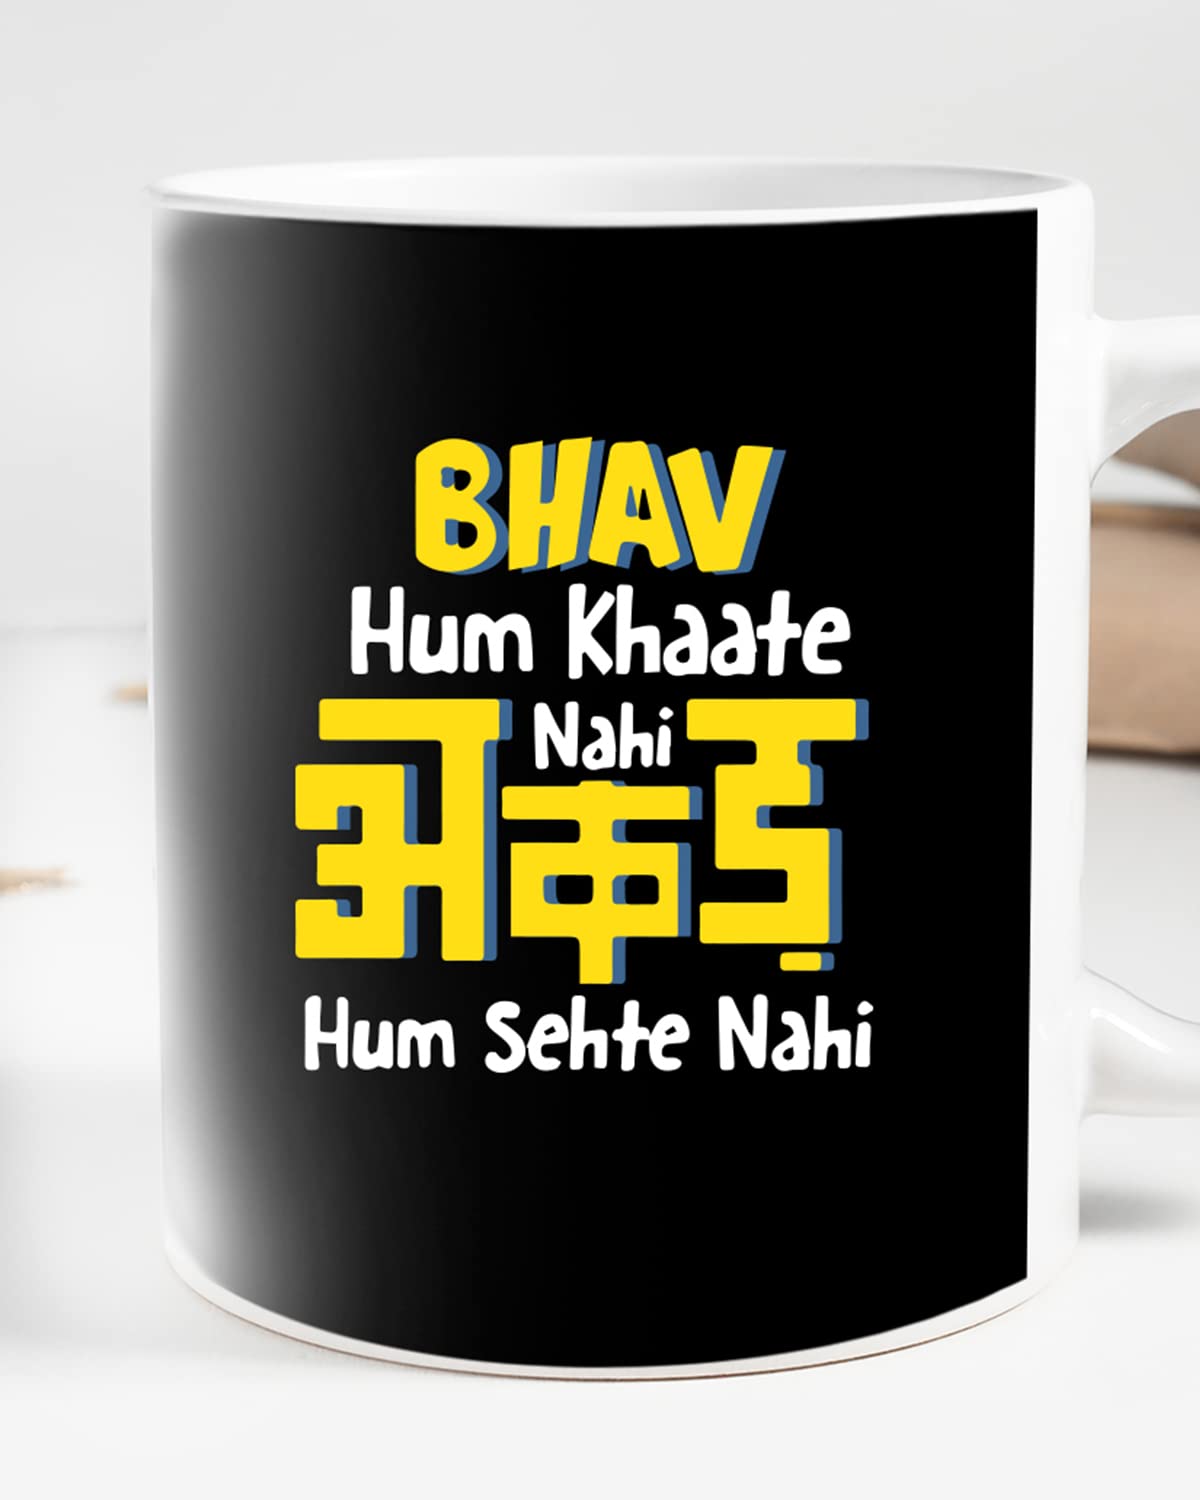 BHAV HUM KHAATE NAHI Coffee Mug - Gift for Friend, Birthday Gift, Birthday Mug, Motivational Quotes Mug, Mugs with Funny & Funky Dialogues, Bollywood Mugs, Funny Mugs for Him & Her